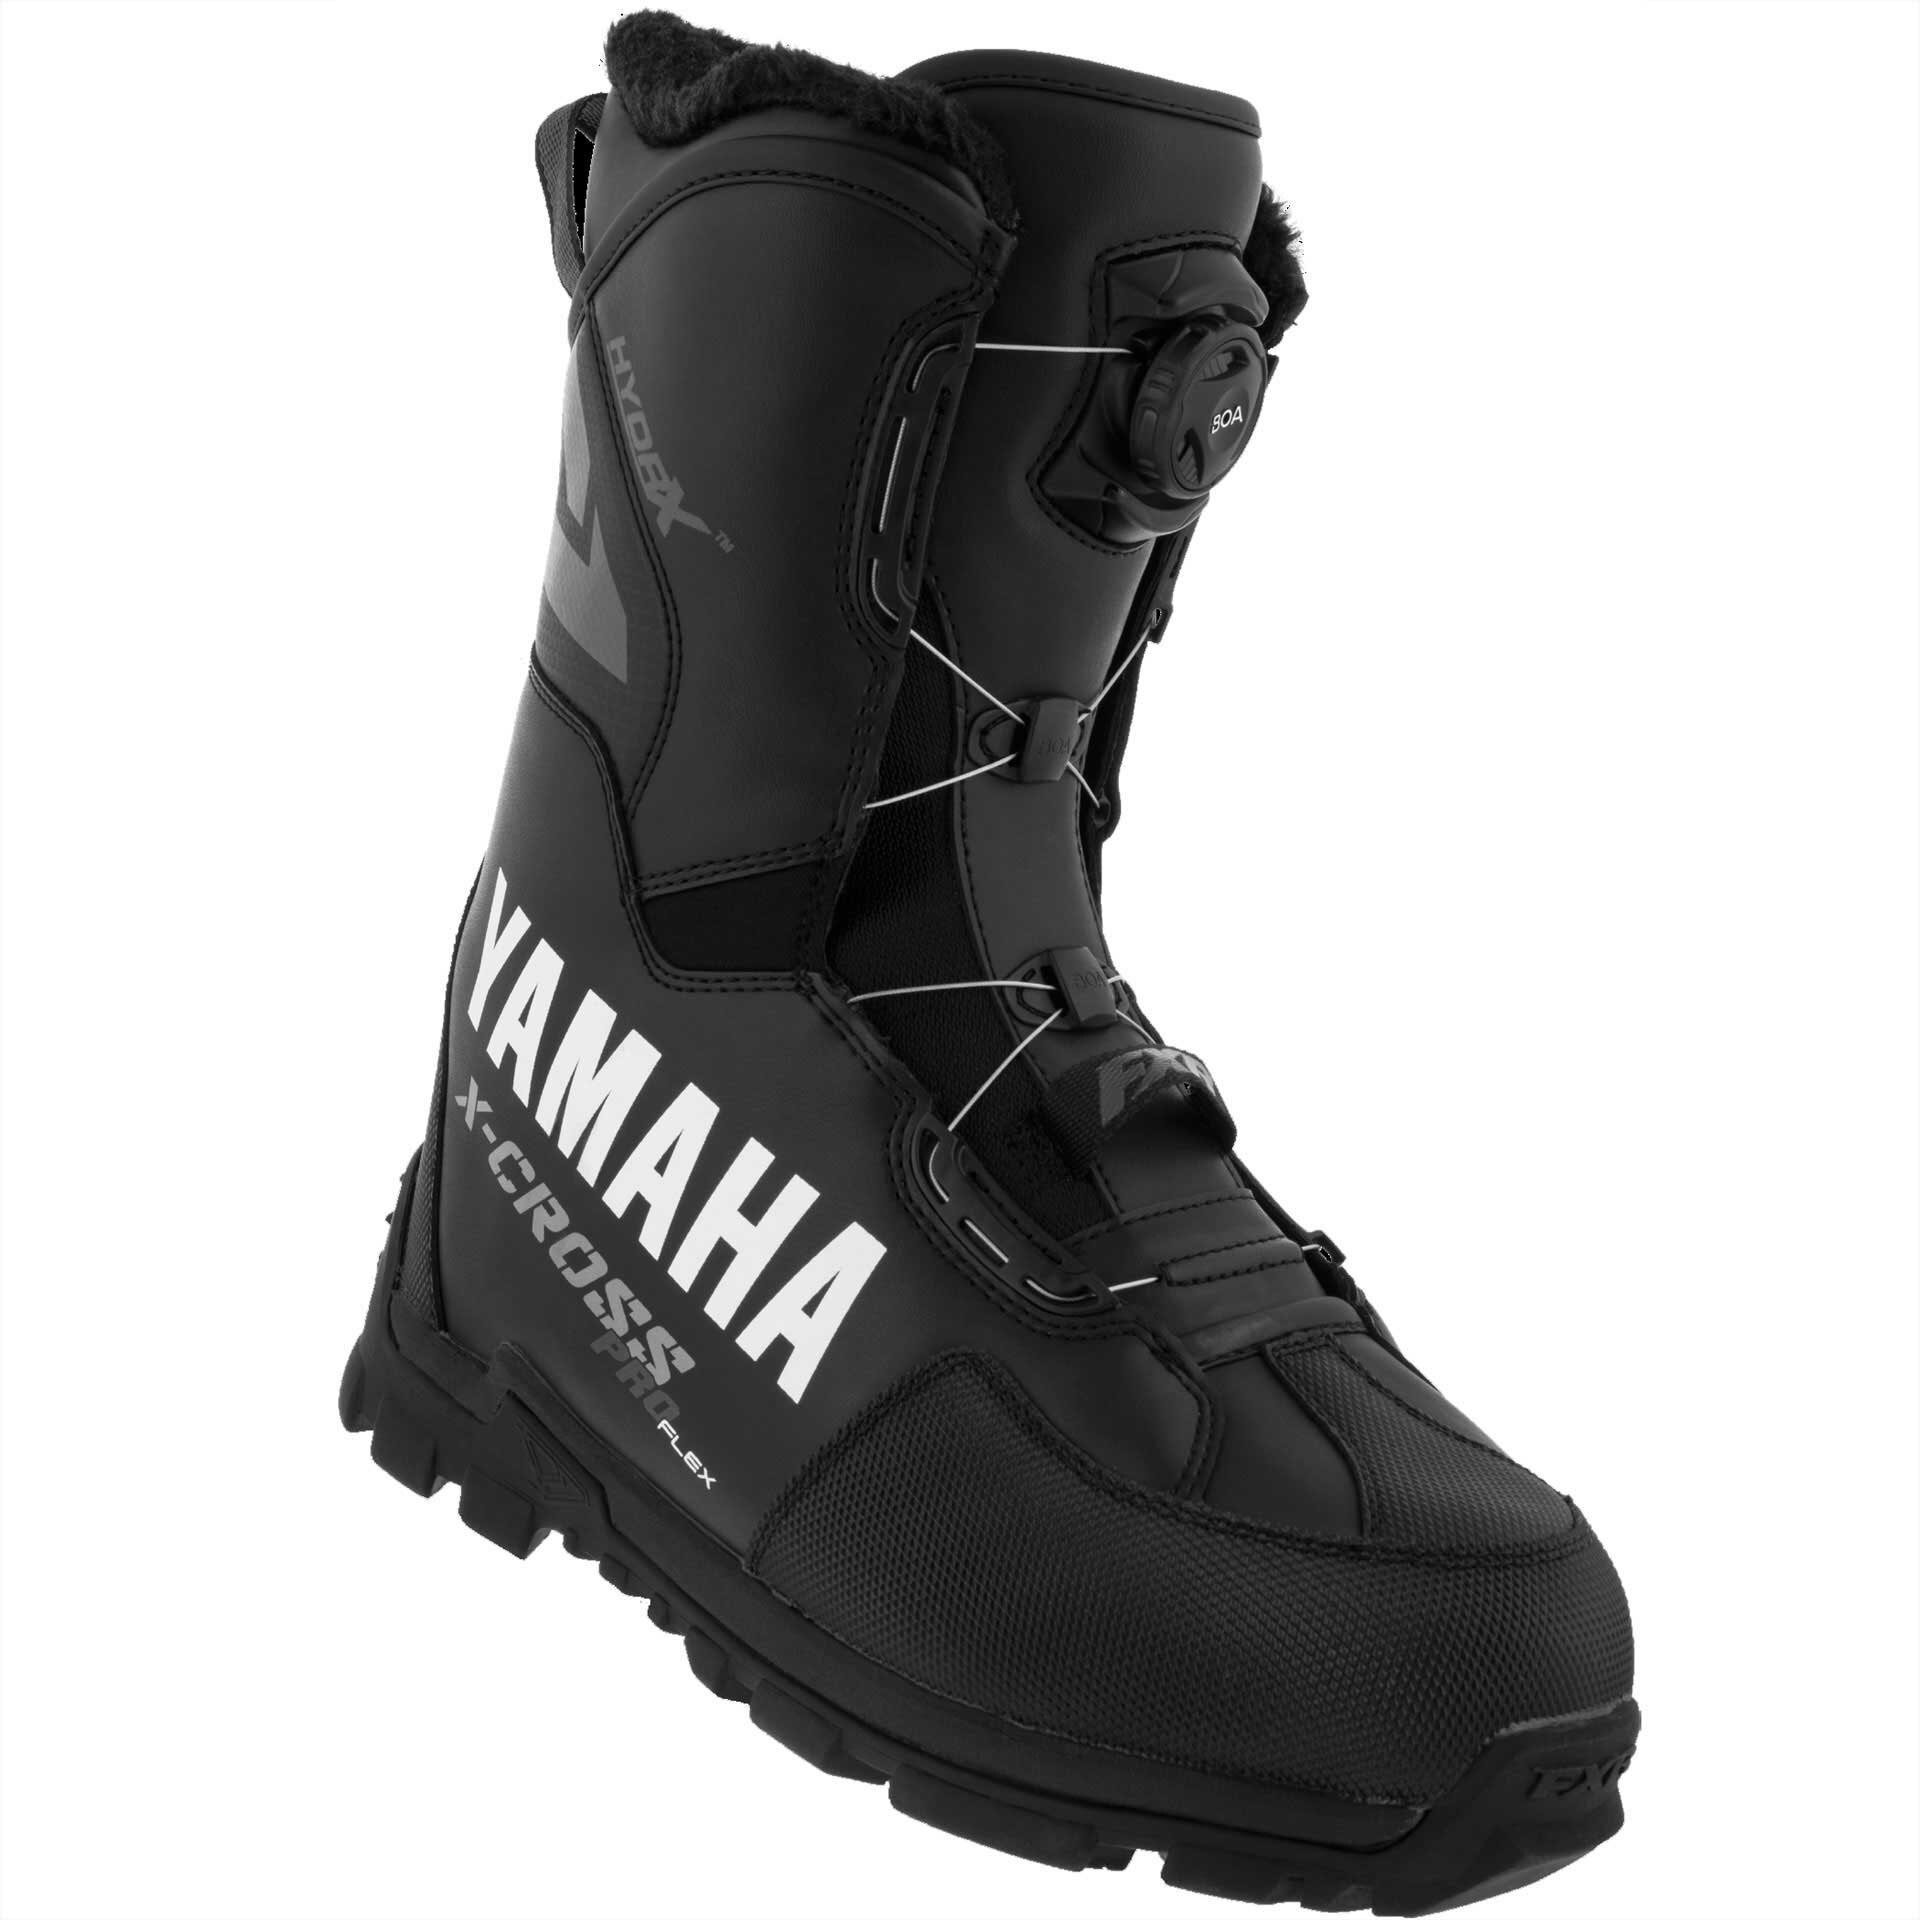 Yamaha X Cross Pro Flex BOA® Boots by FXR® Size 7 black